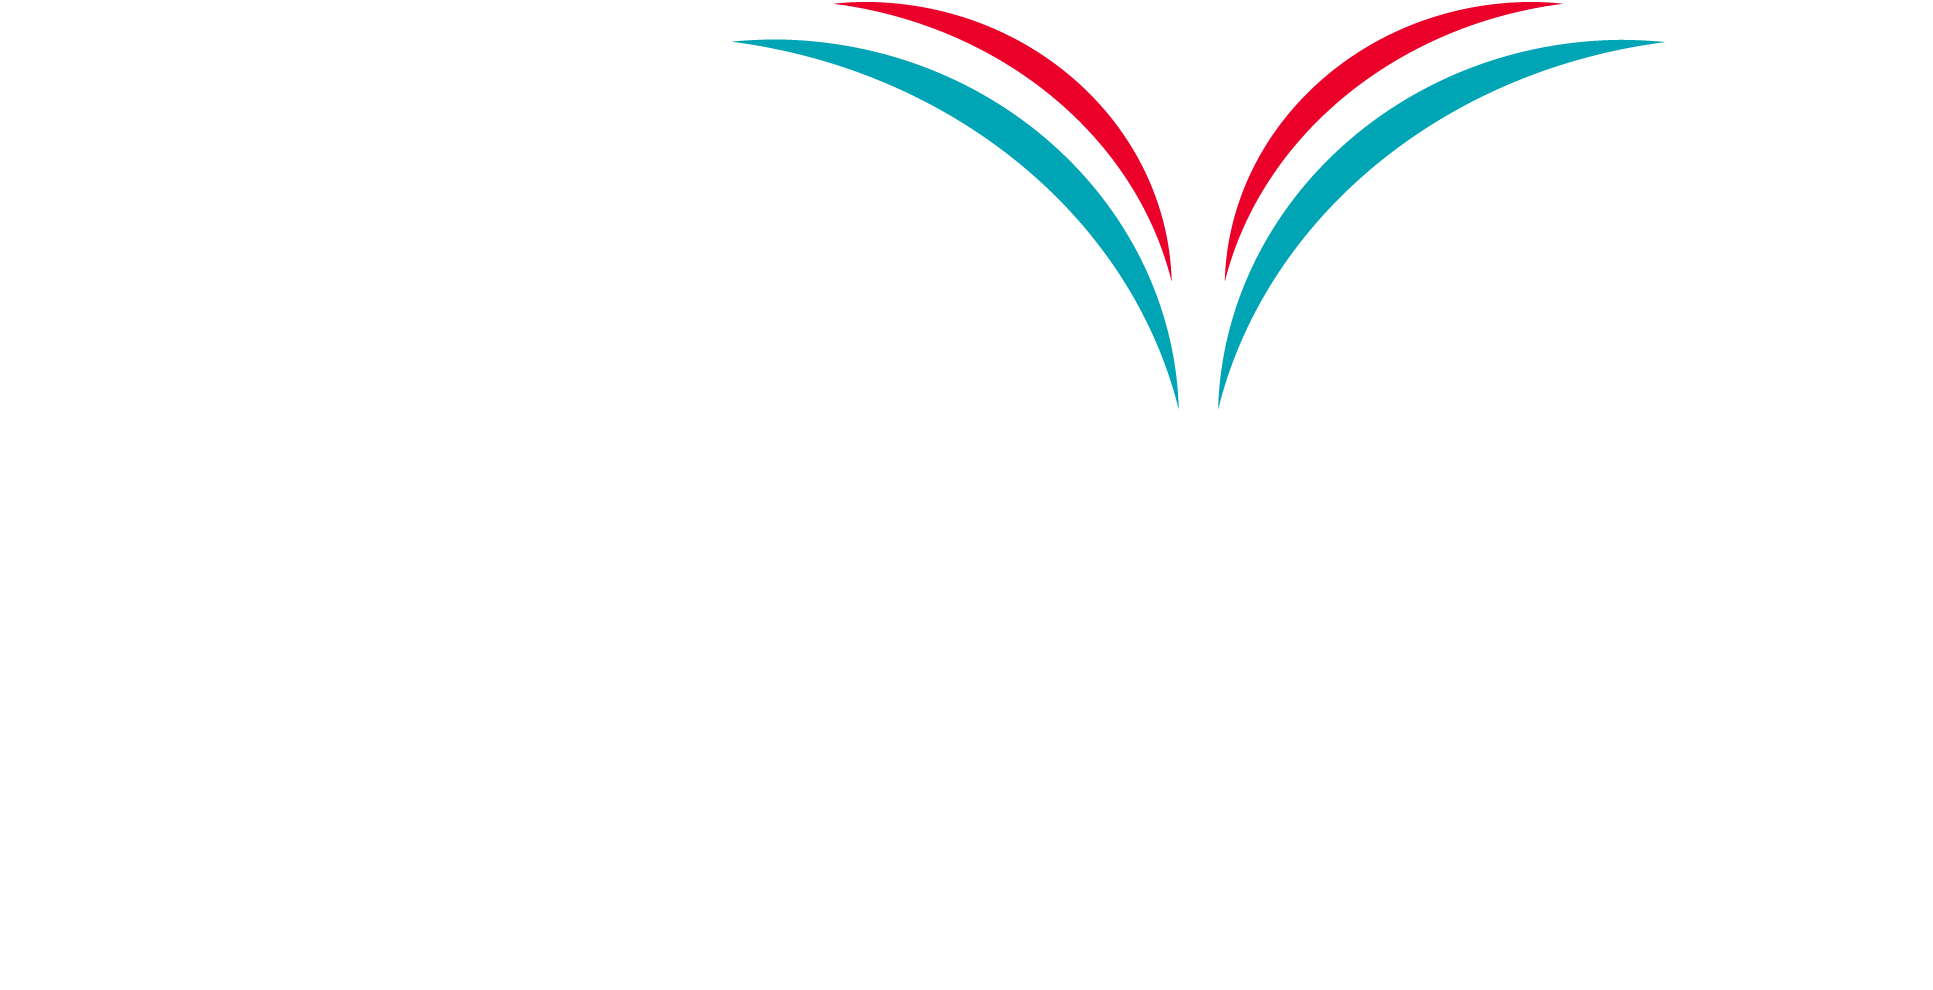 Tove Learning Trust Logo